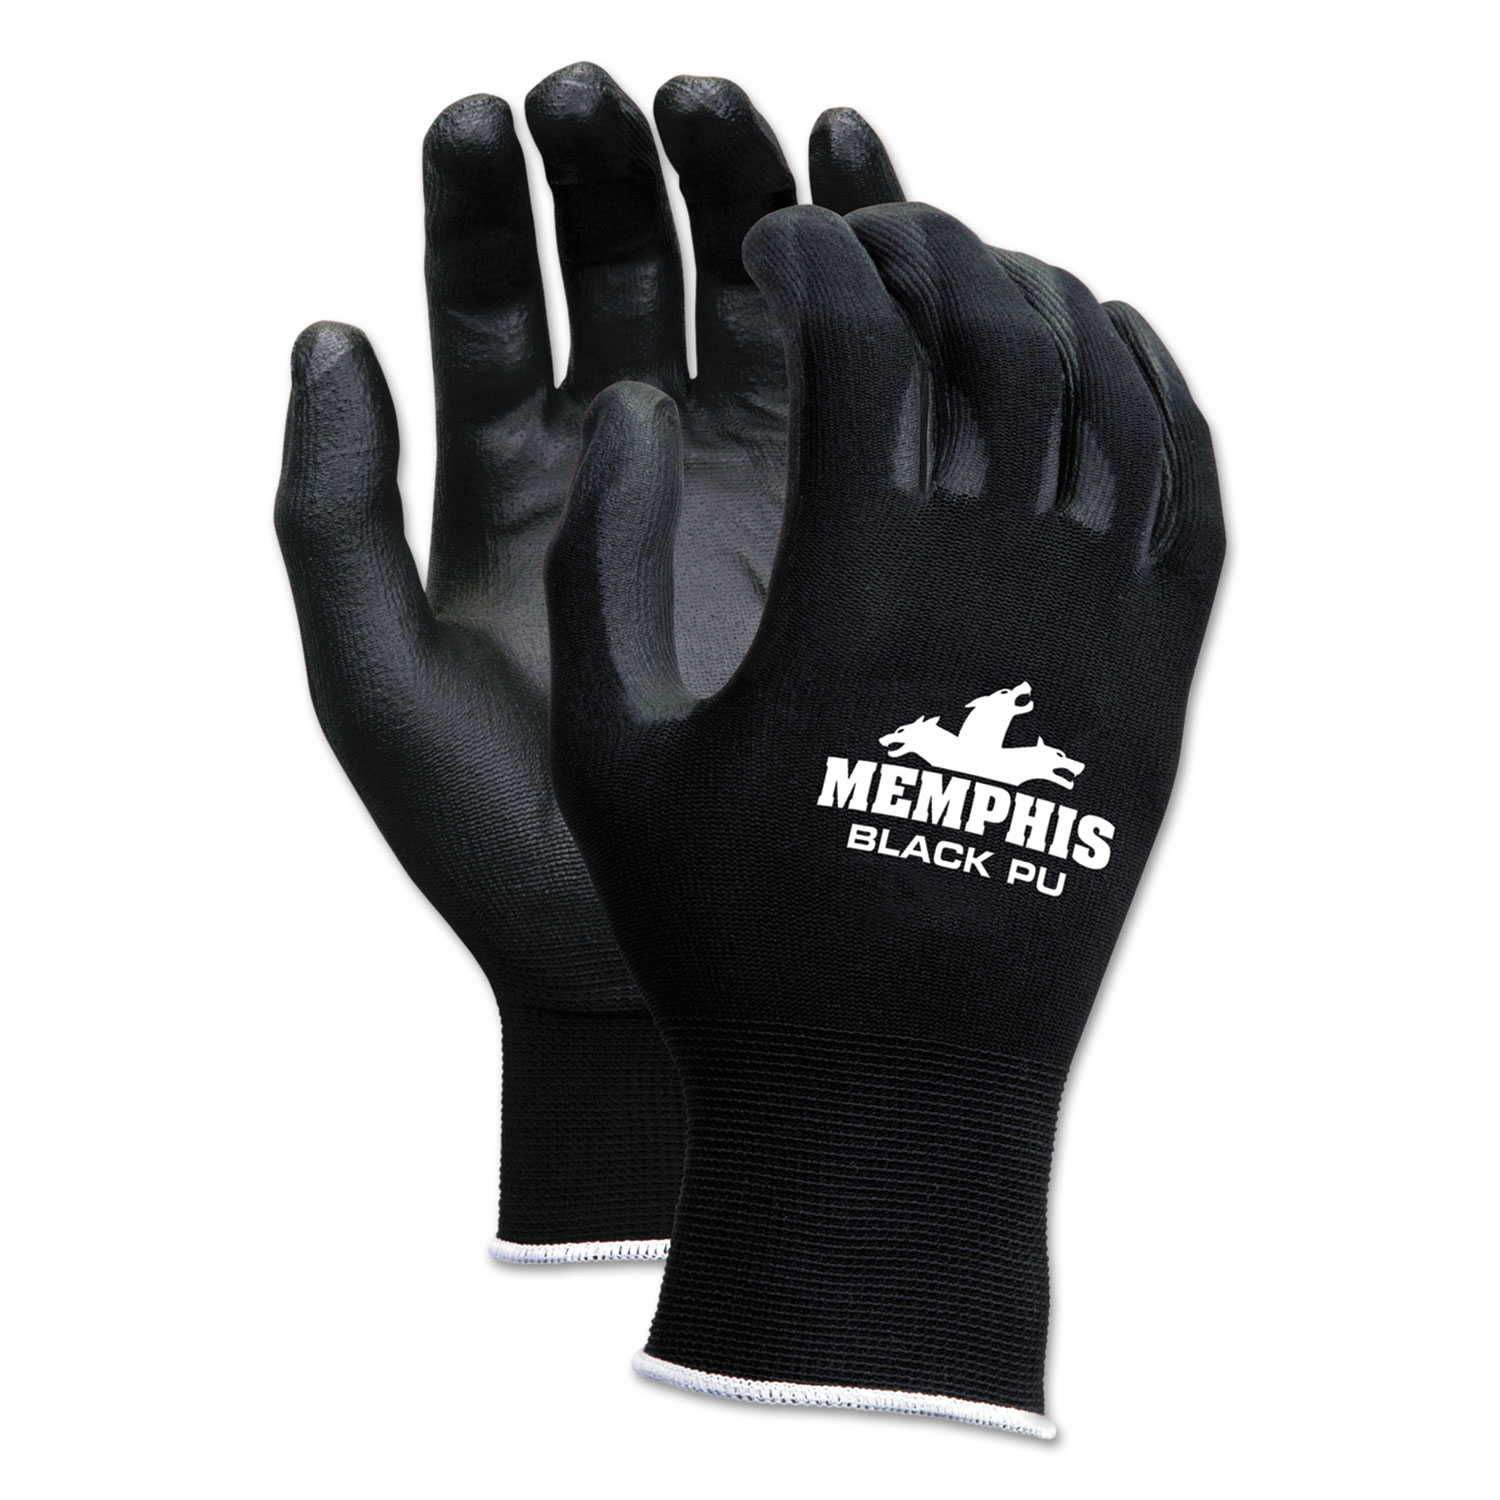 Quality assurance Economy PU Coated Work Gloves, Black, Small, Dozen -  Office, black work gloves